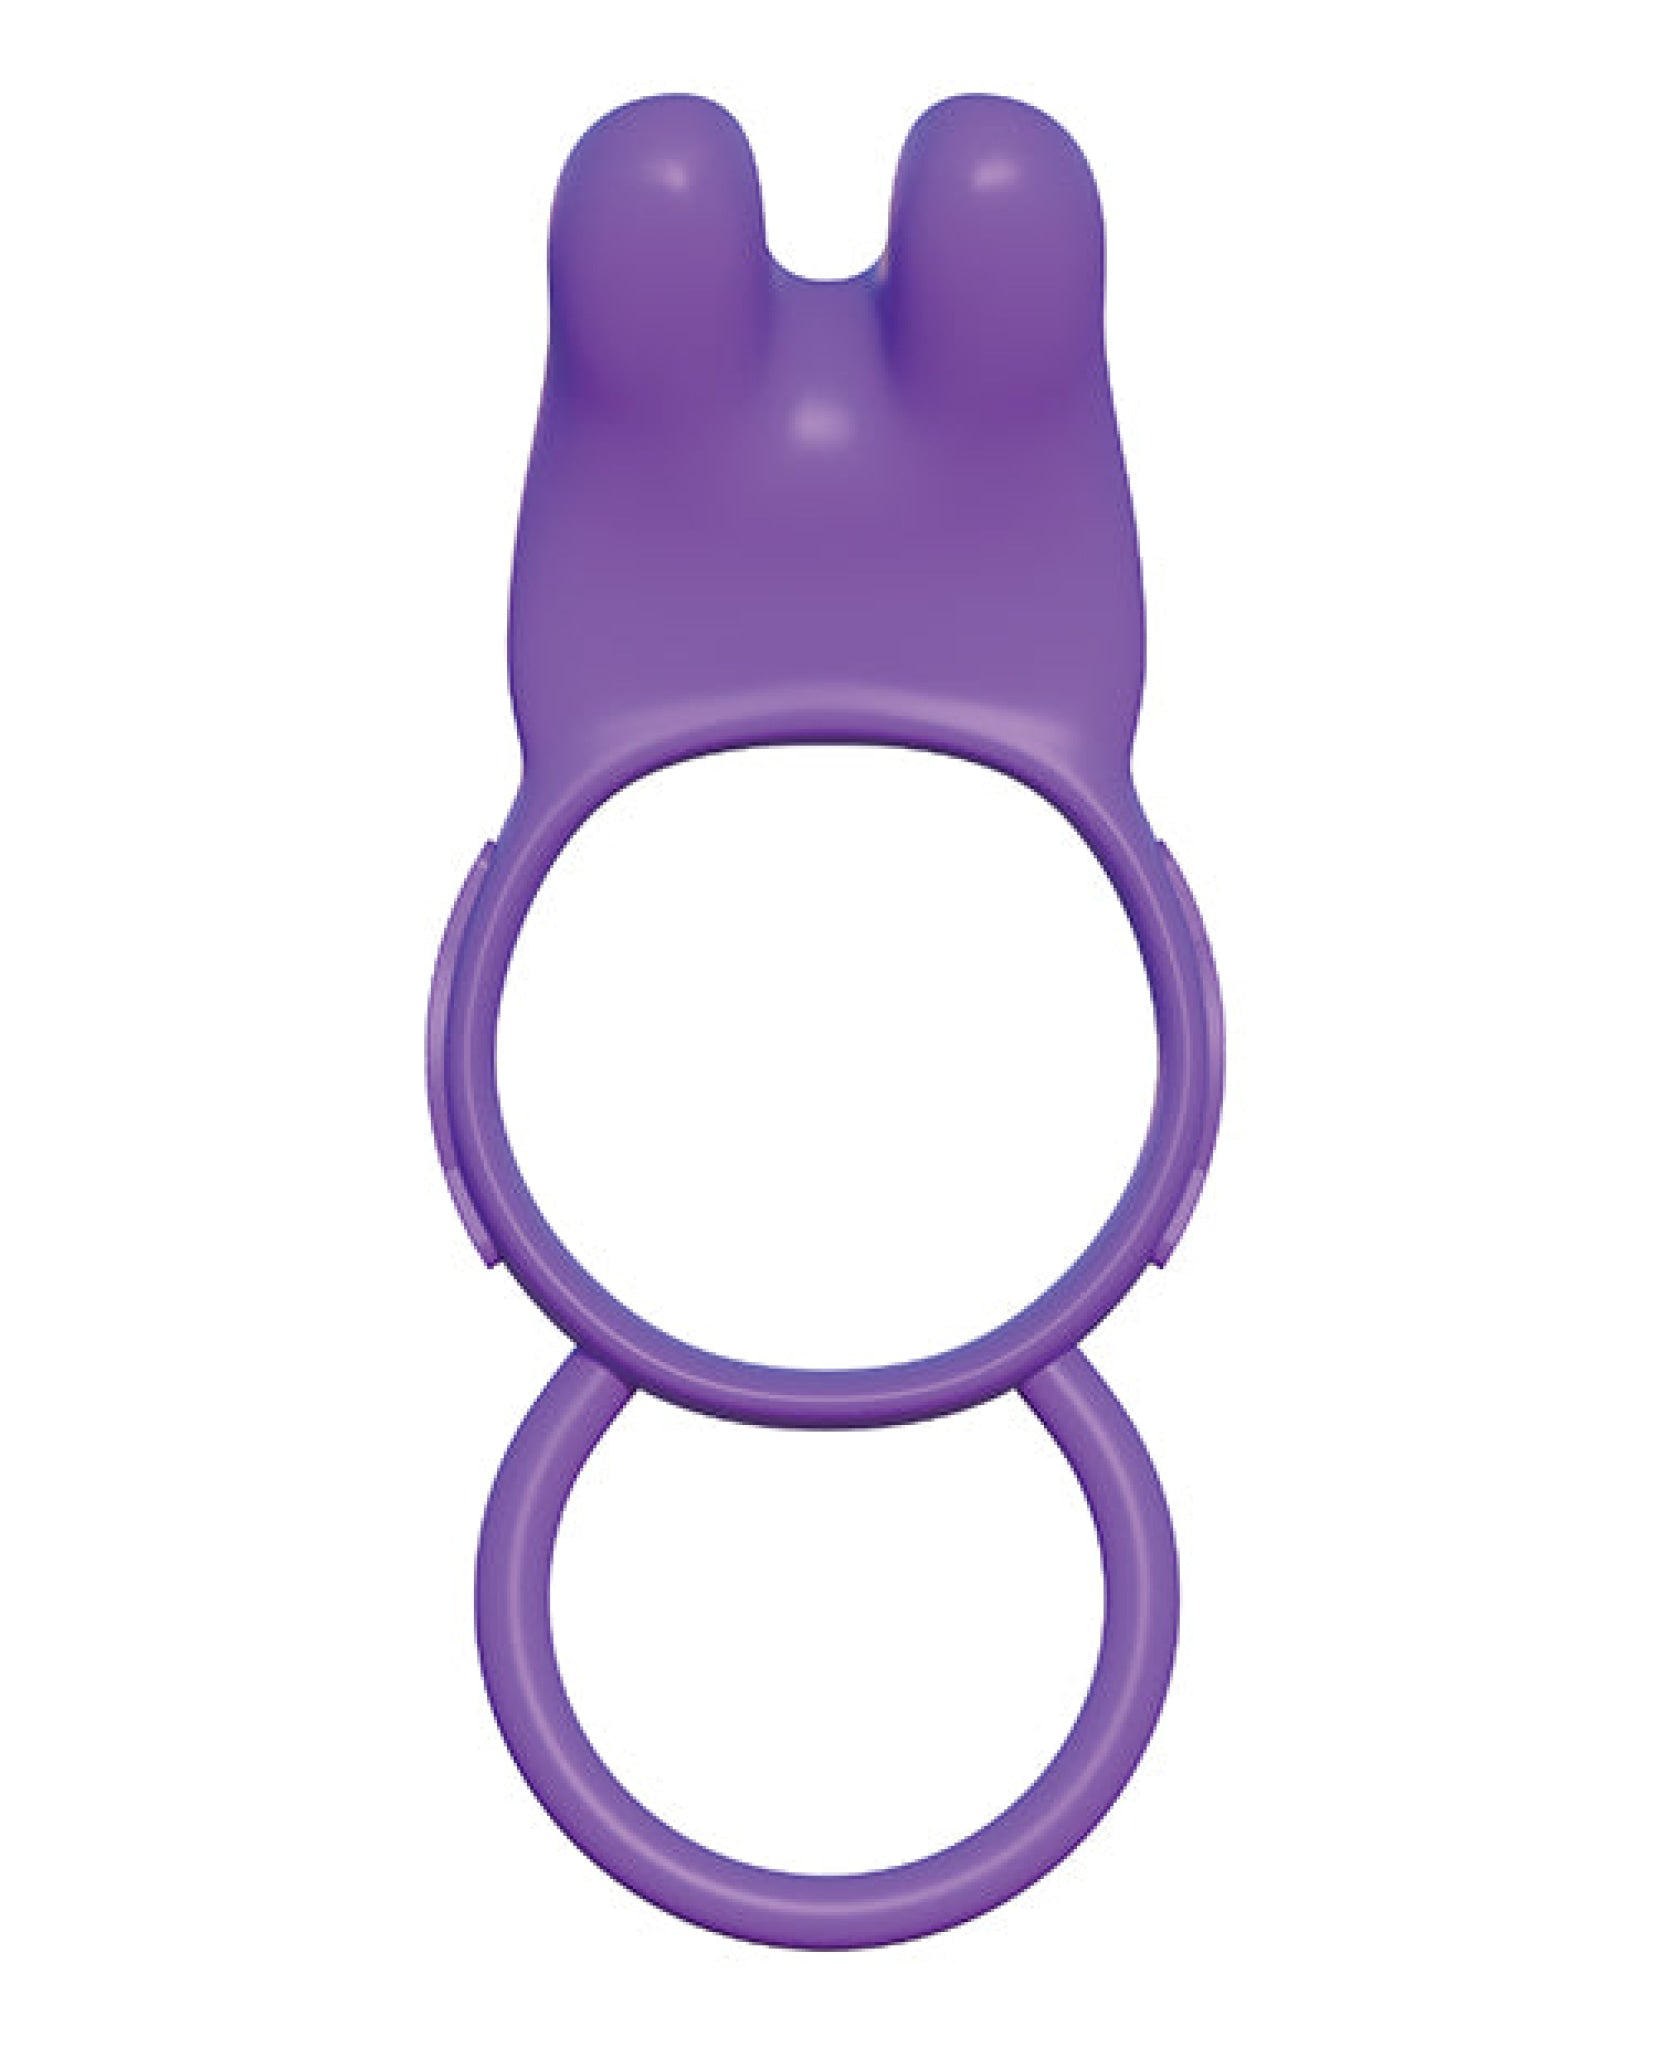 Fantasy C-ringz Twin Teazer Rabbit Ring - Purple Pipedream®